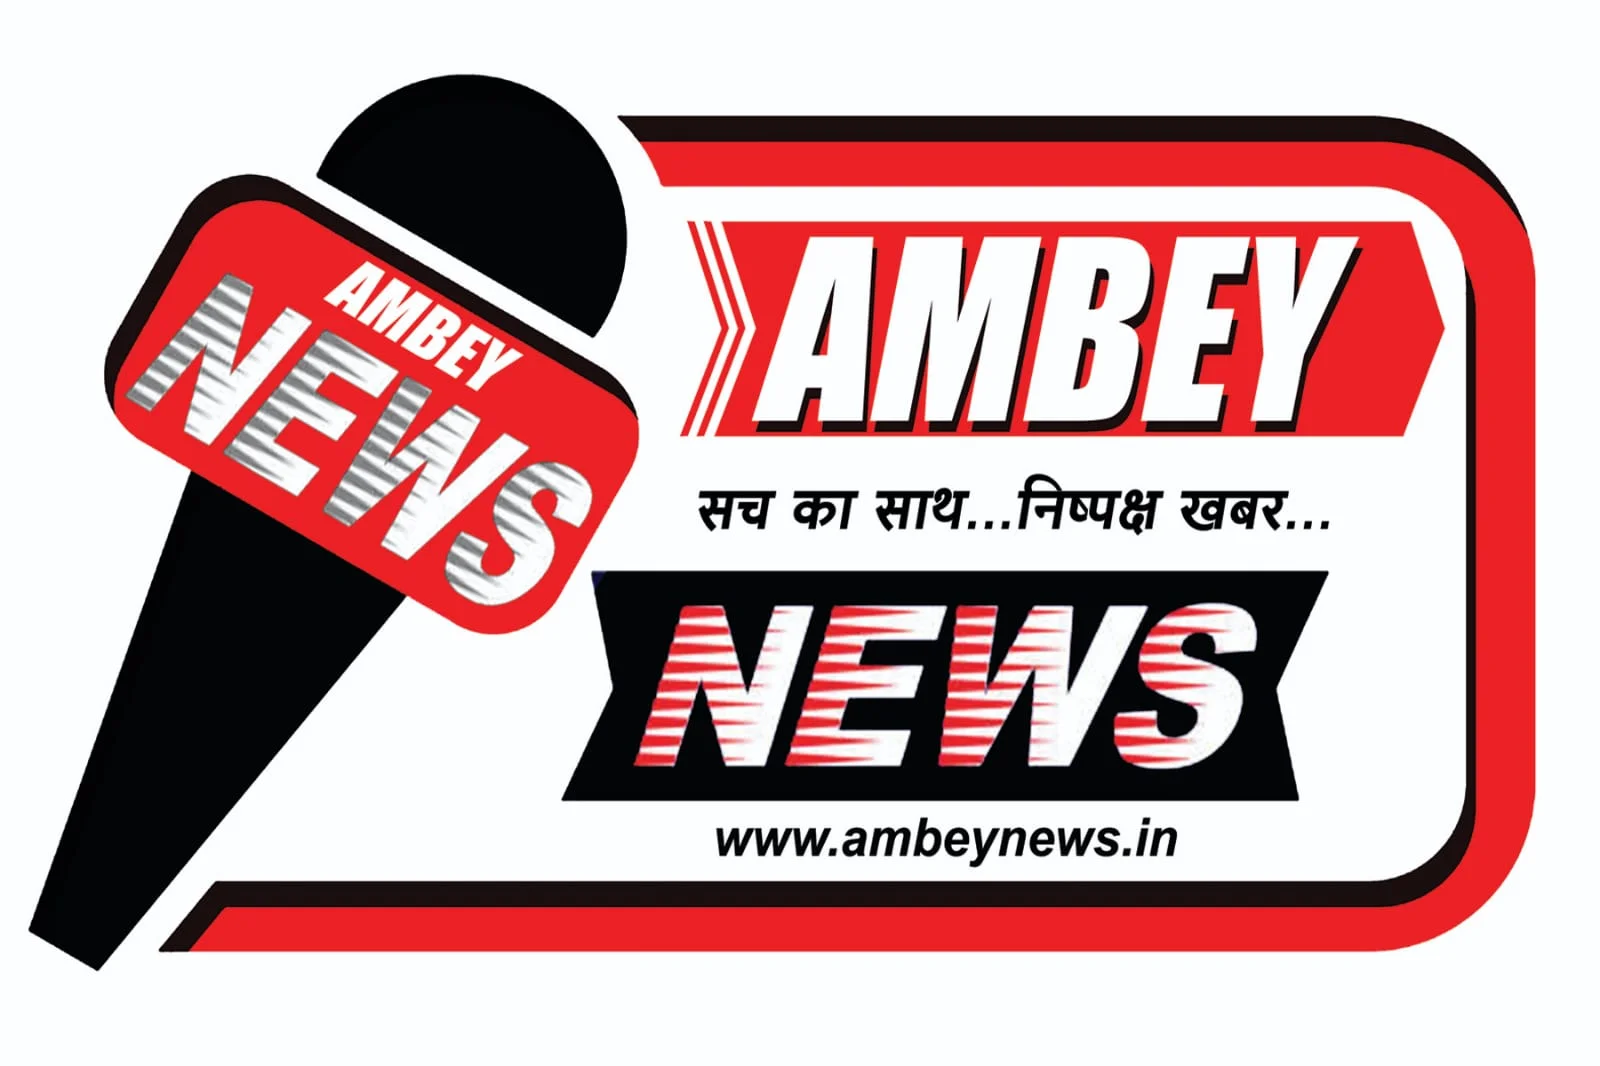 Ambey News